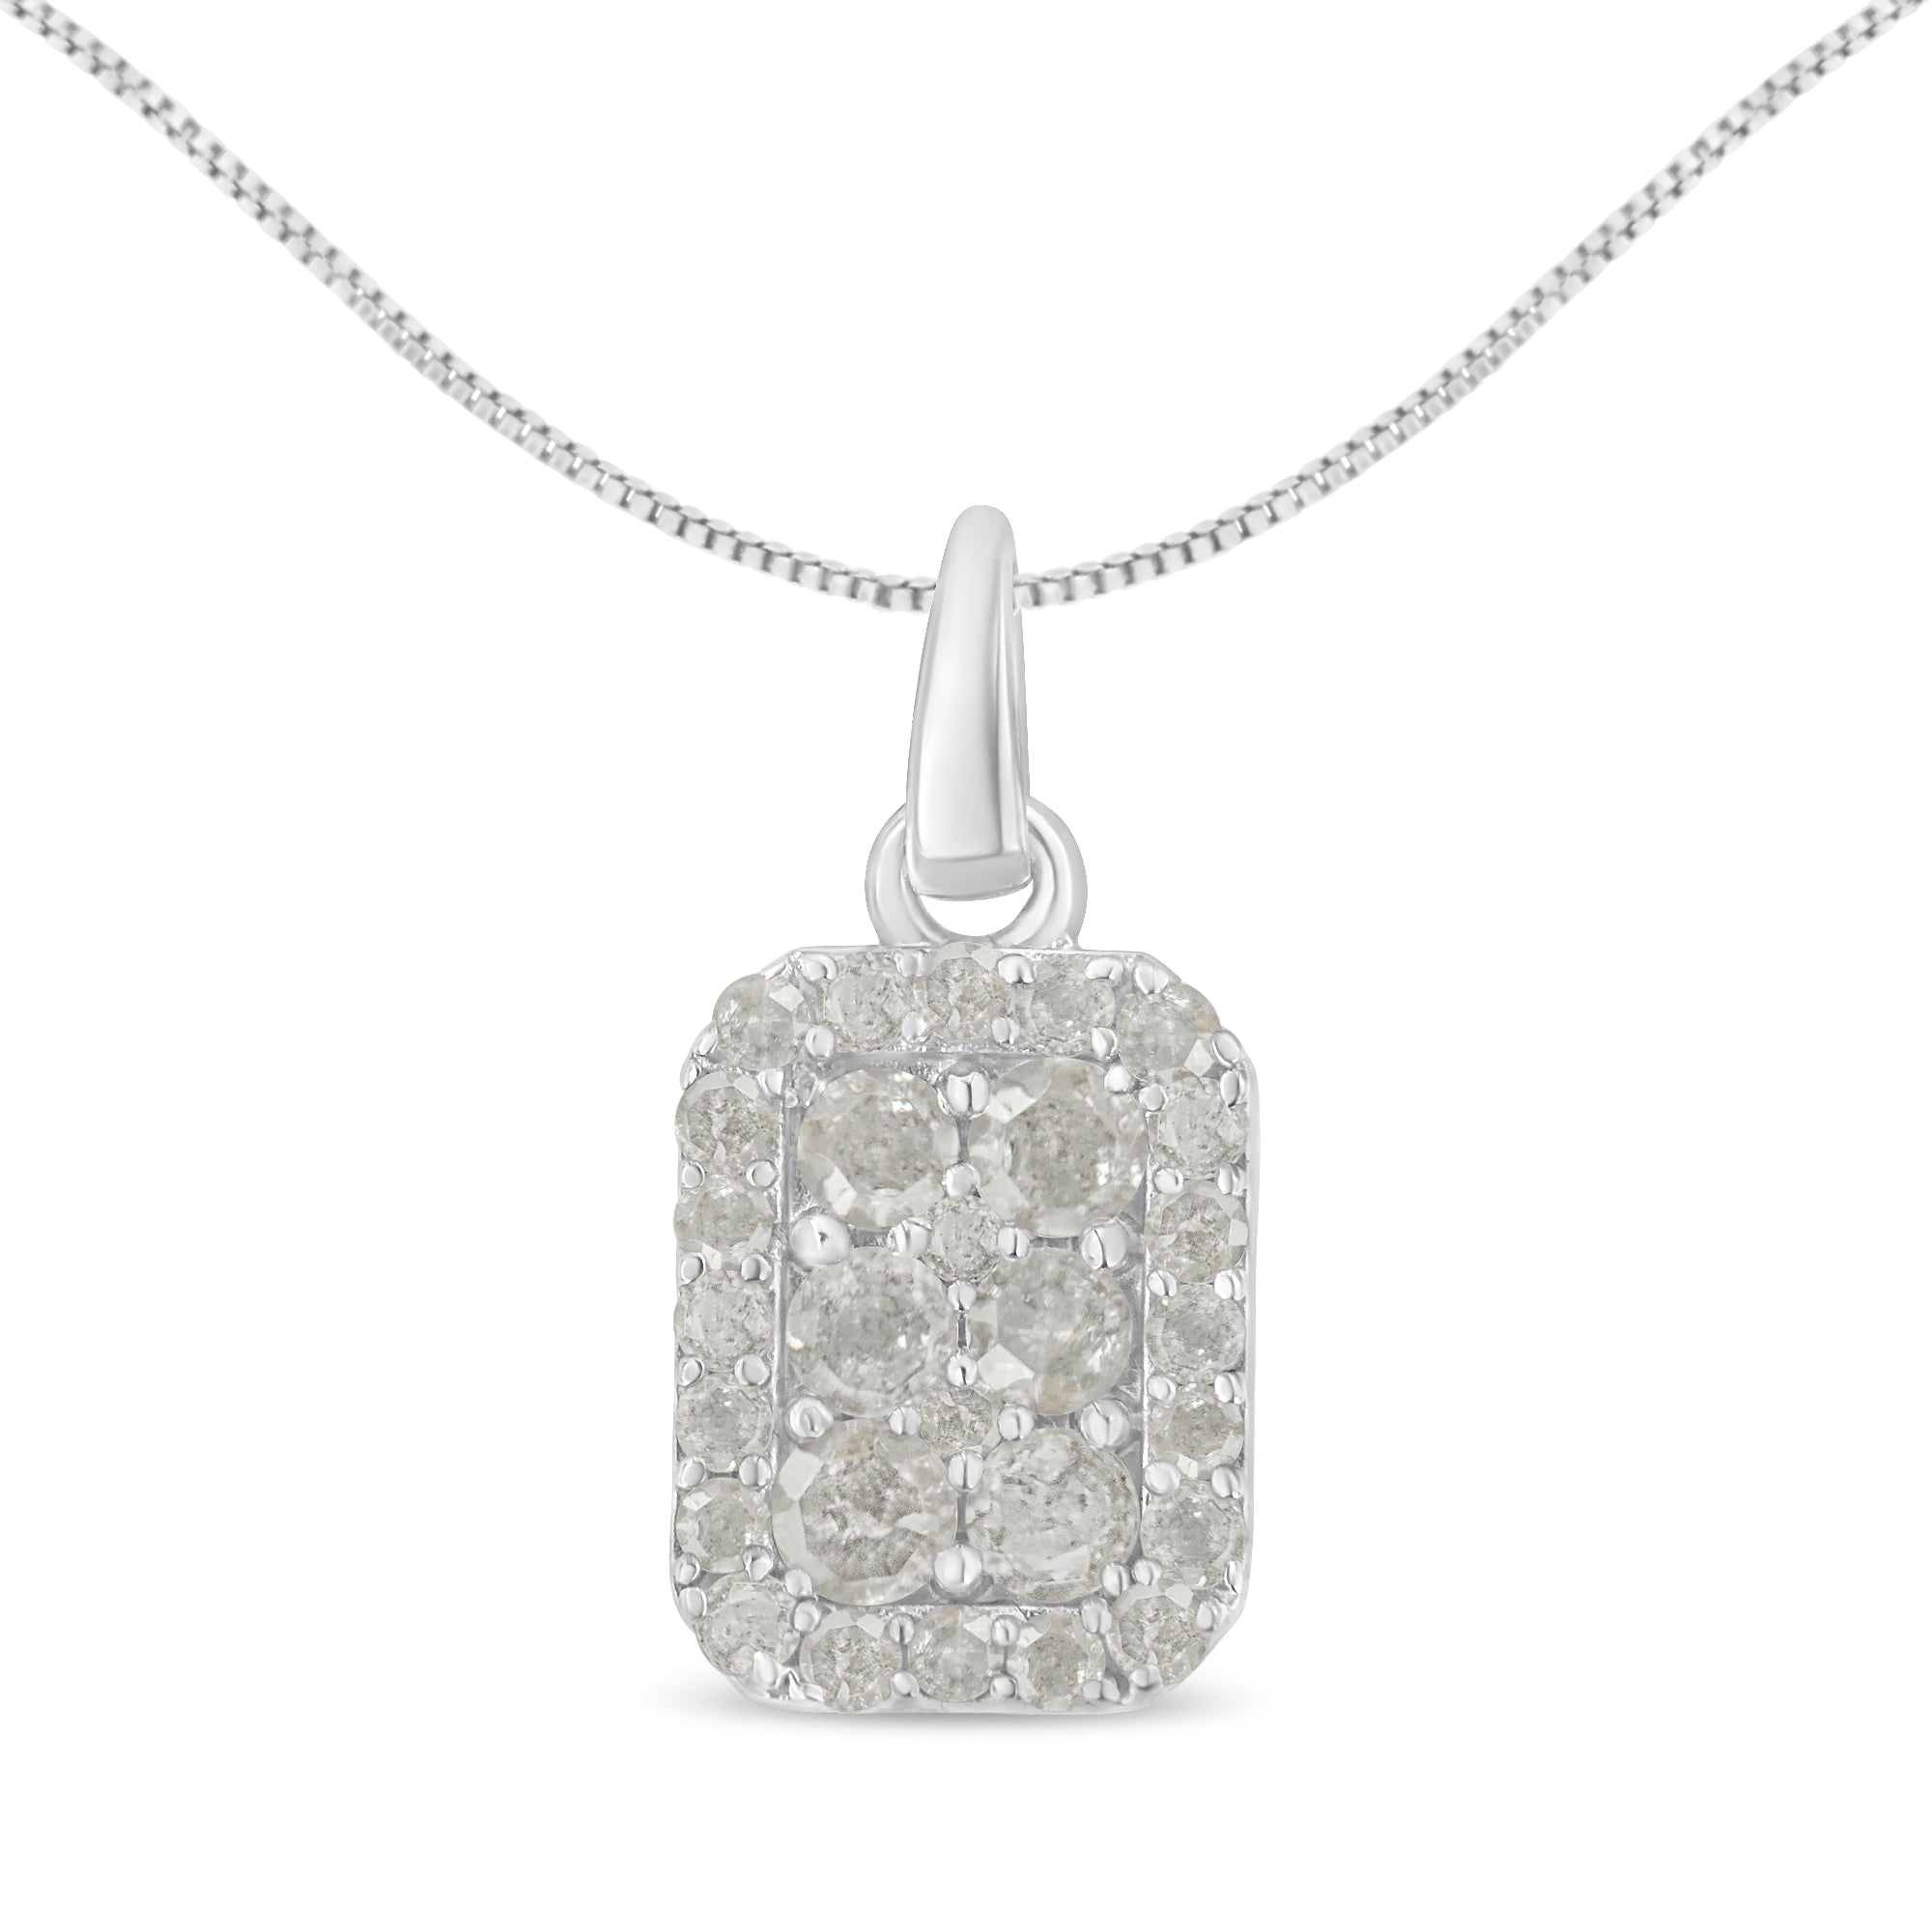 .925-Sterling-Silver-1-Cttw-Diamond-Block-Pendant-Necklace-(I-J,-I3-Promo)-Pendants-&-Charms